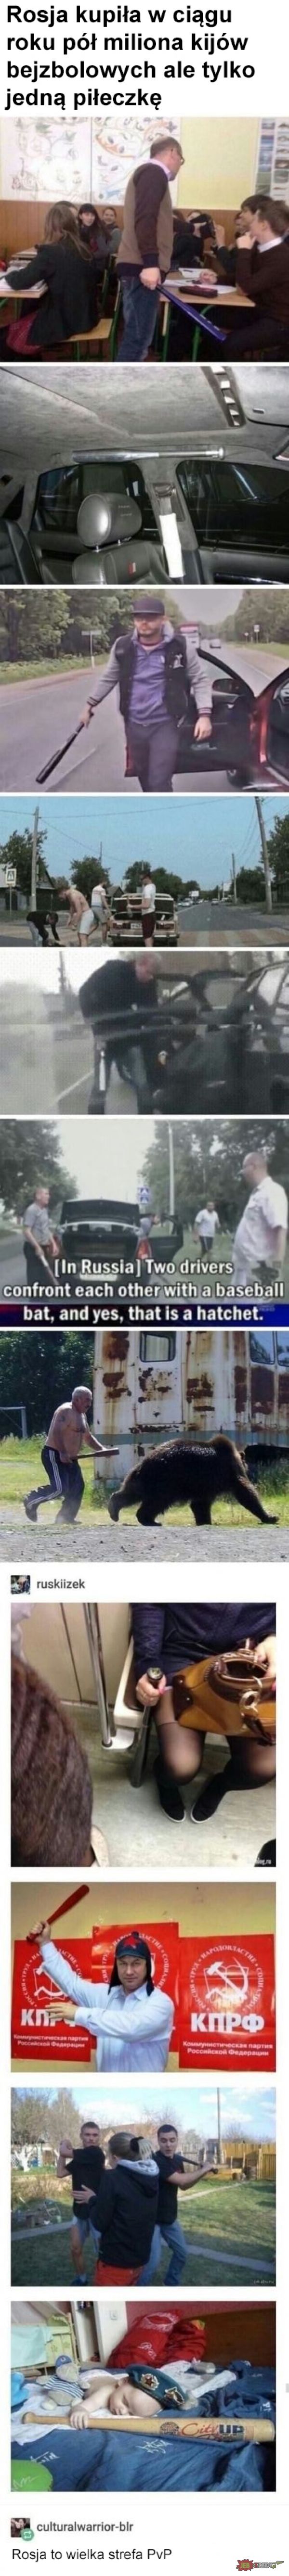 Ruski baseball